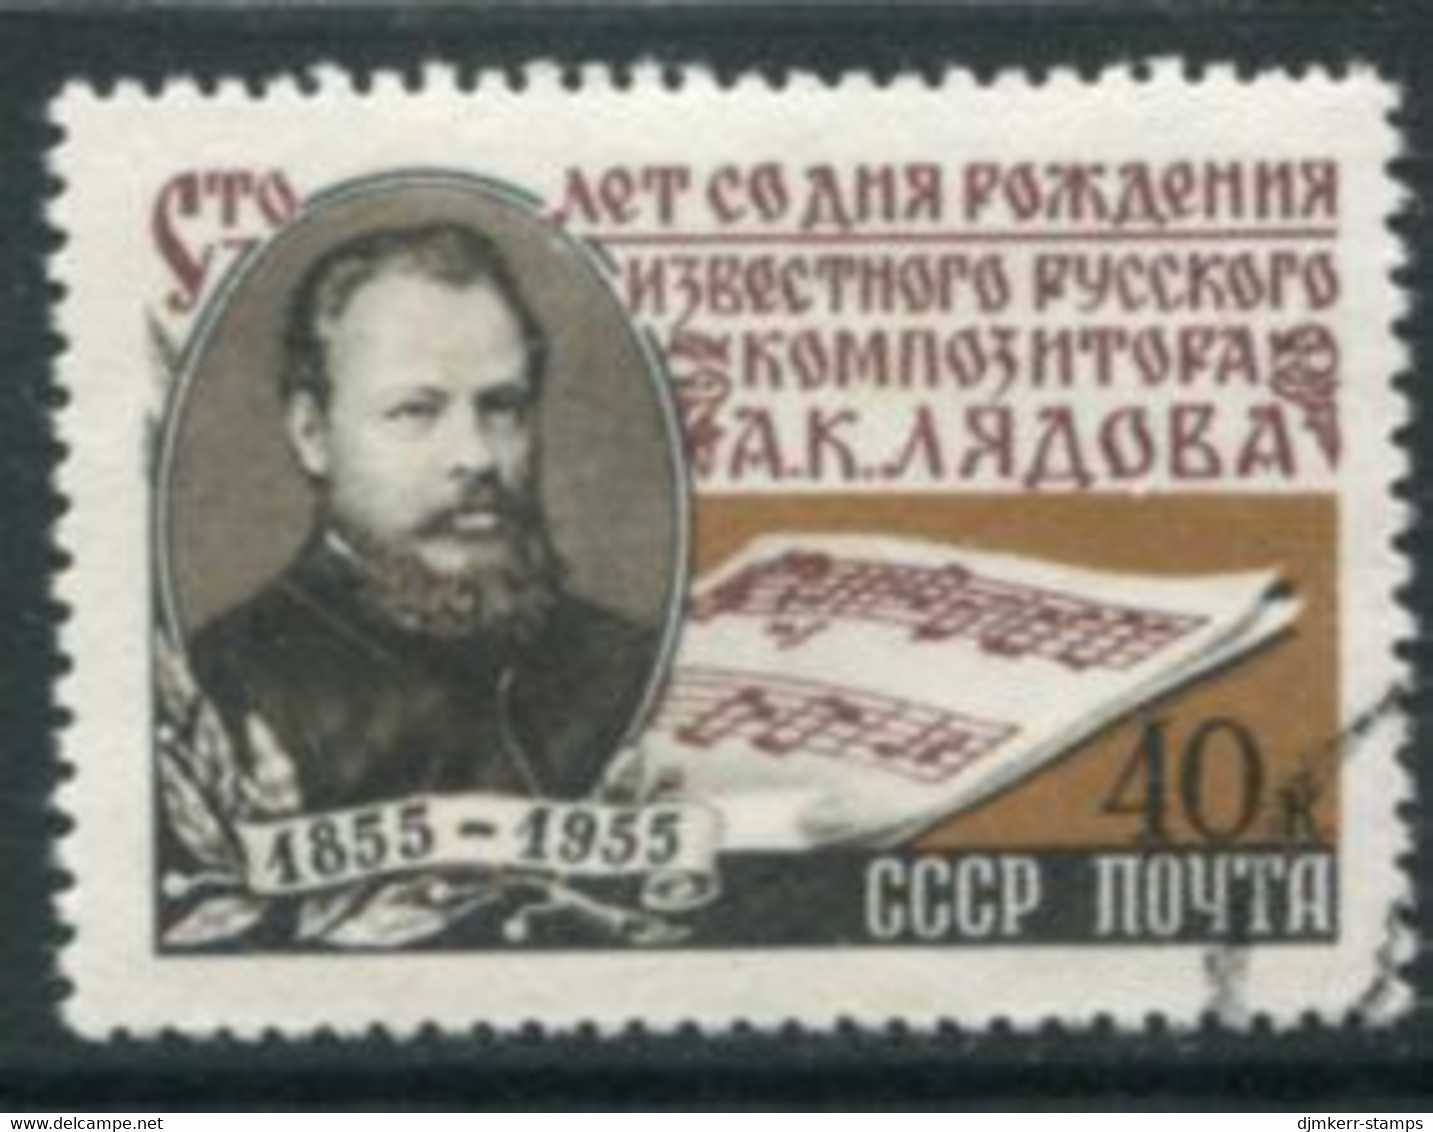 SOVIET UNION 1955 Liadov Birth Centenary Used  Michel 1783 - Used Stamps